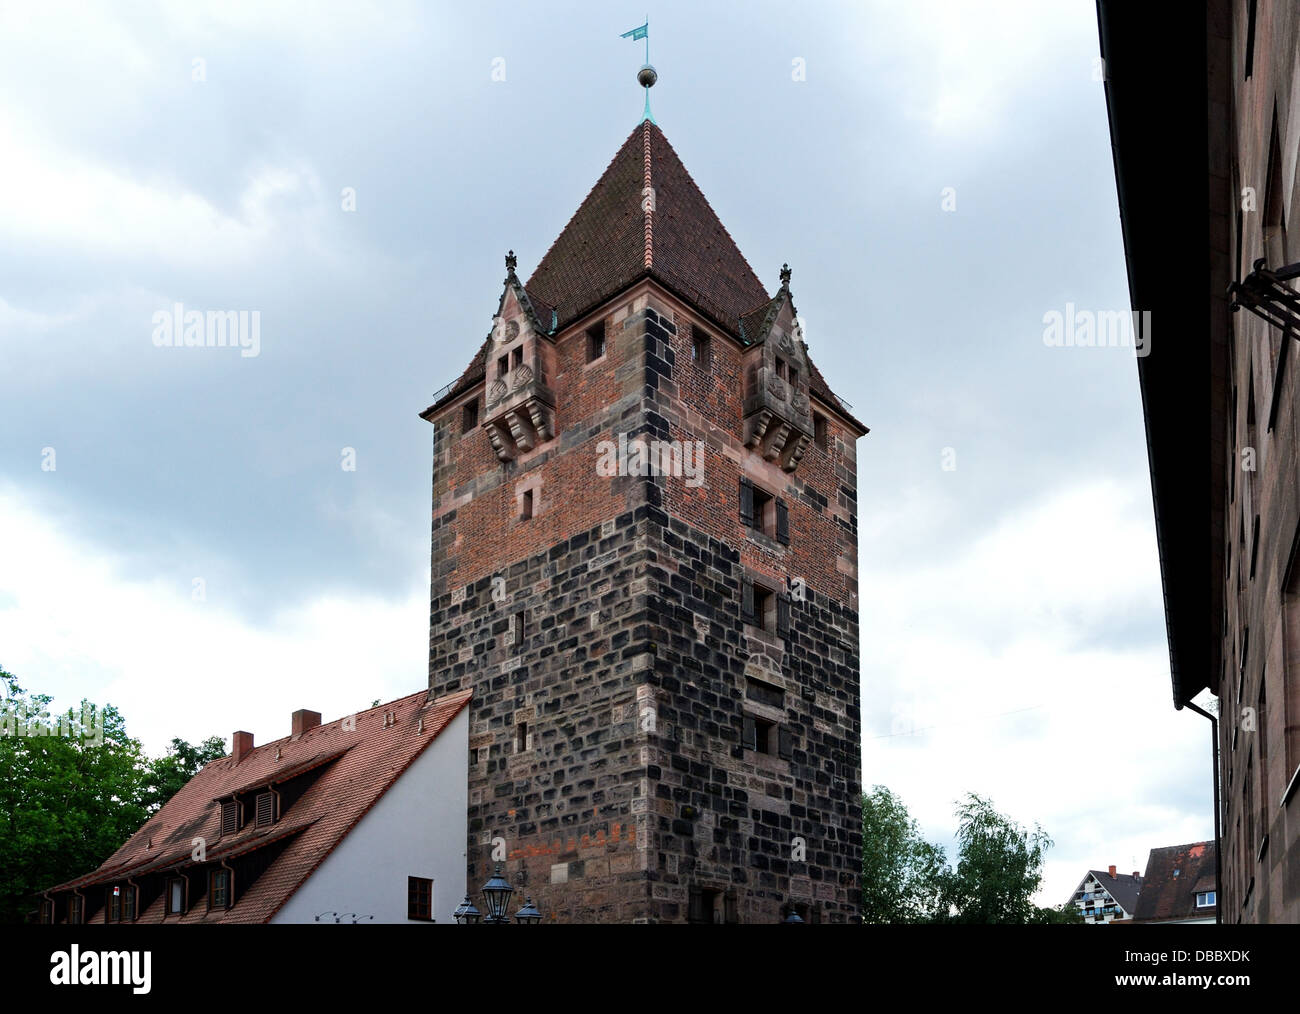 Schuldturm Tower (Debtor’s prison), built in 1323, Nuremberg, Bavaria, Germany, Western Europe. Stock Photo